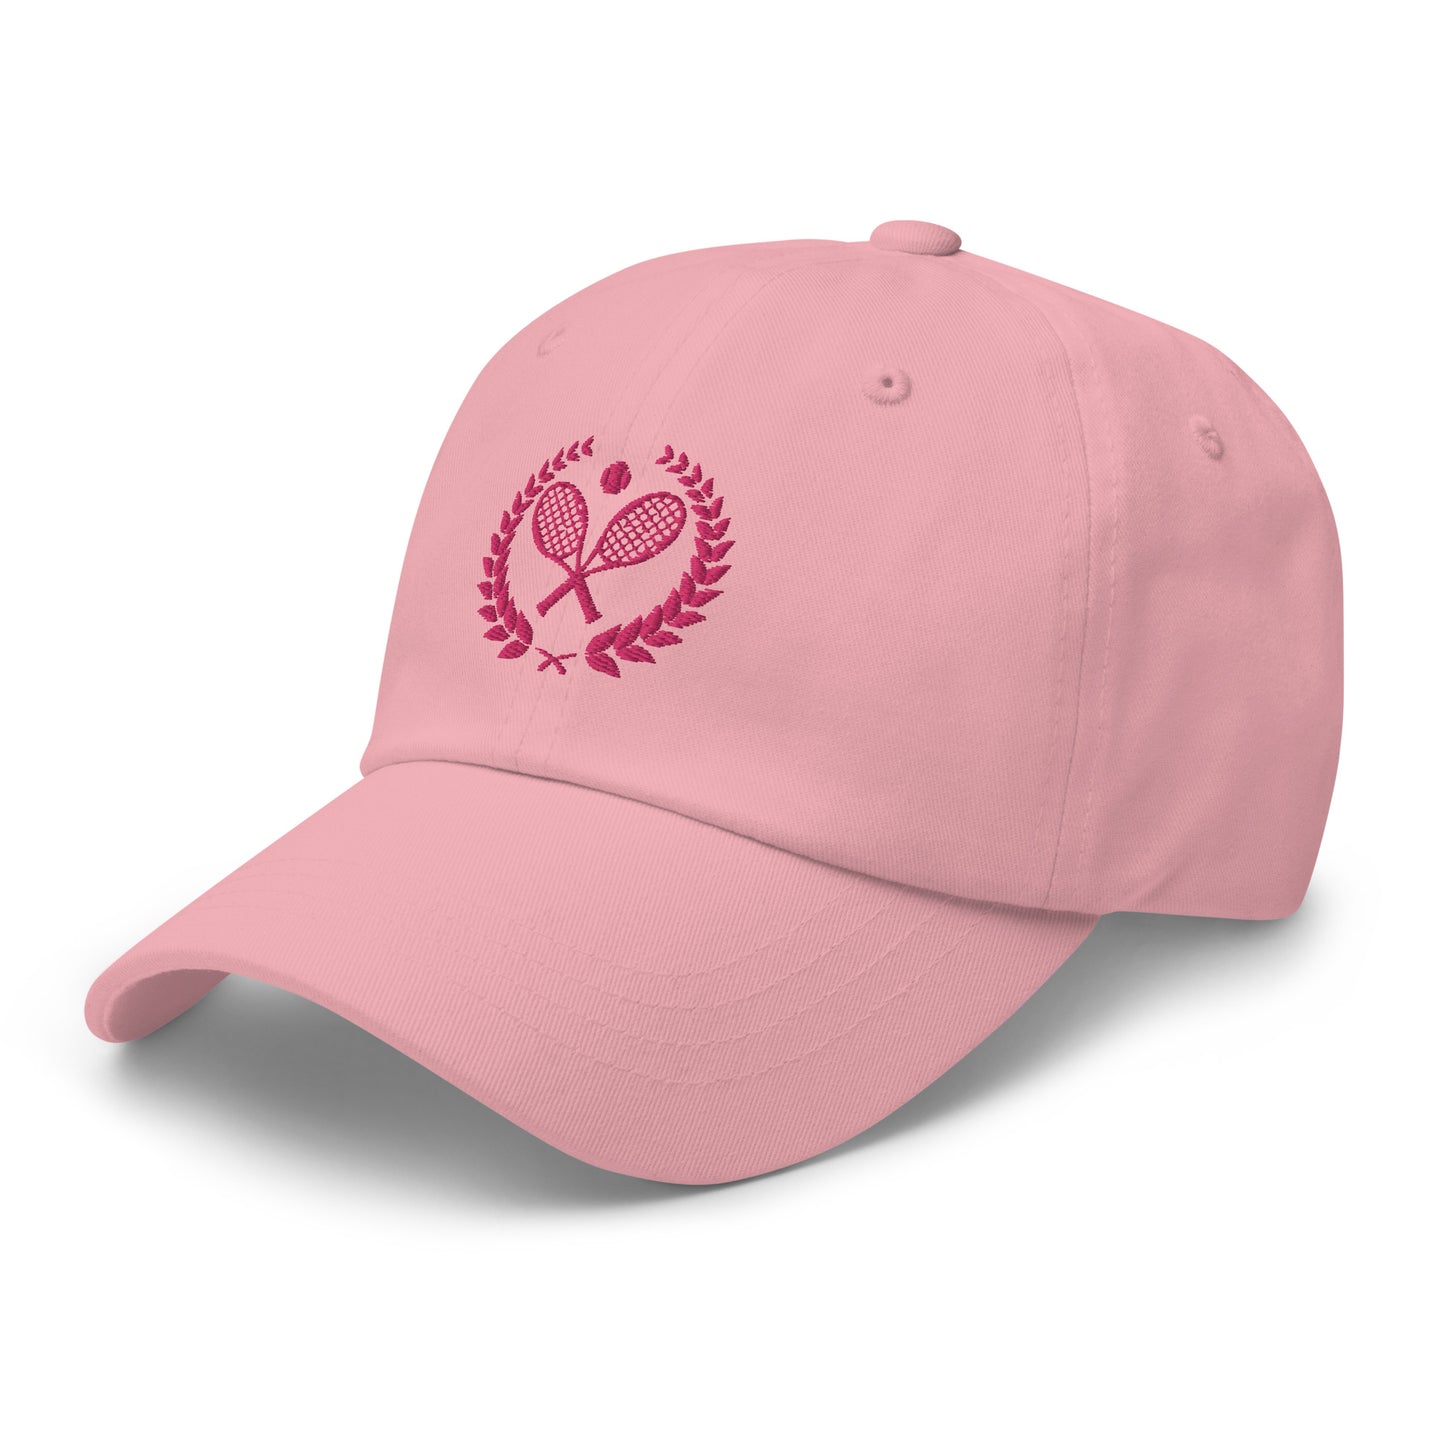 Pink Tennis Club hat